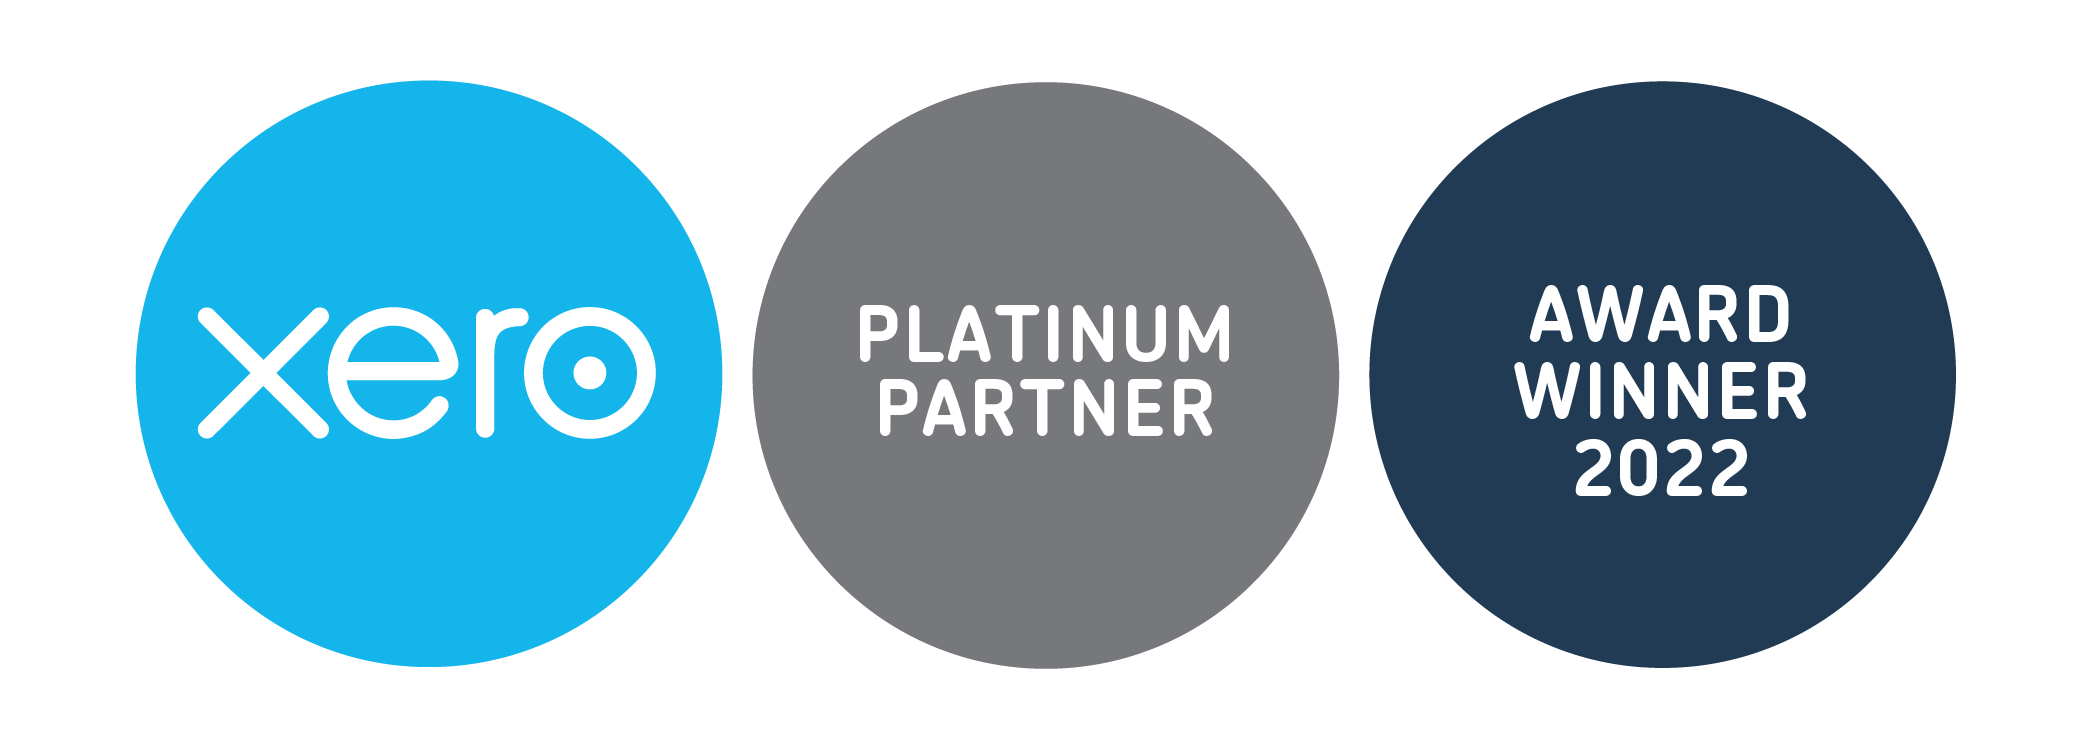 Genus is an award-winning Xero Platinum partner